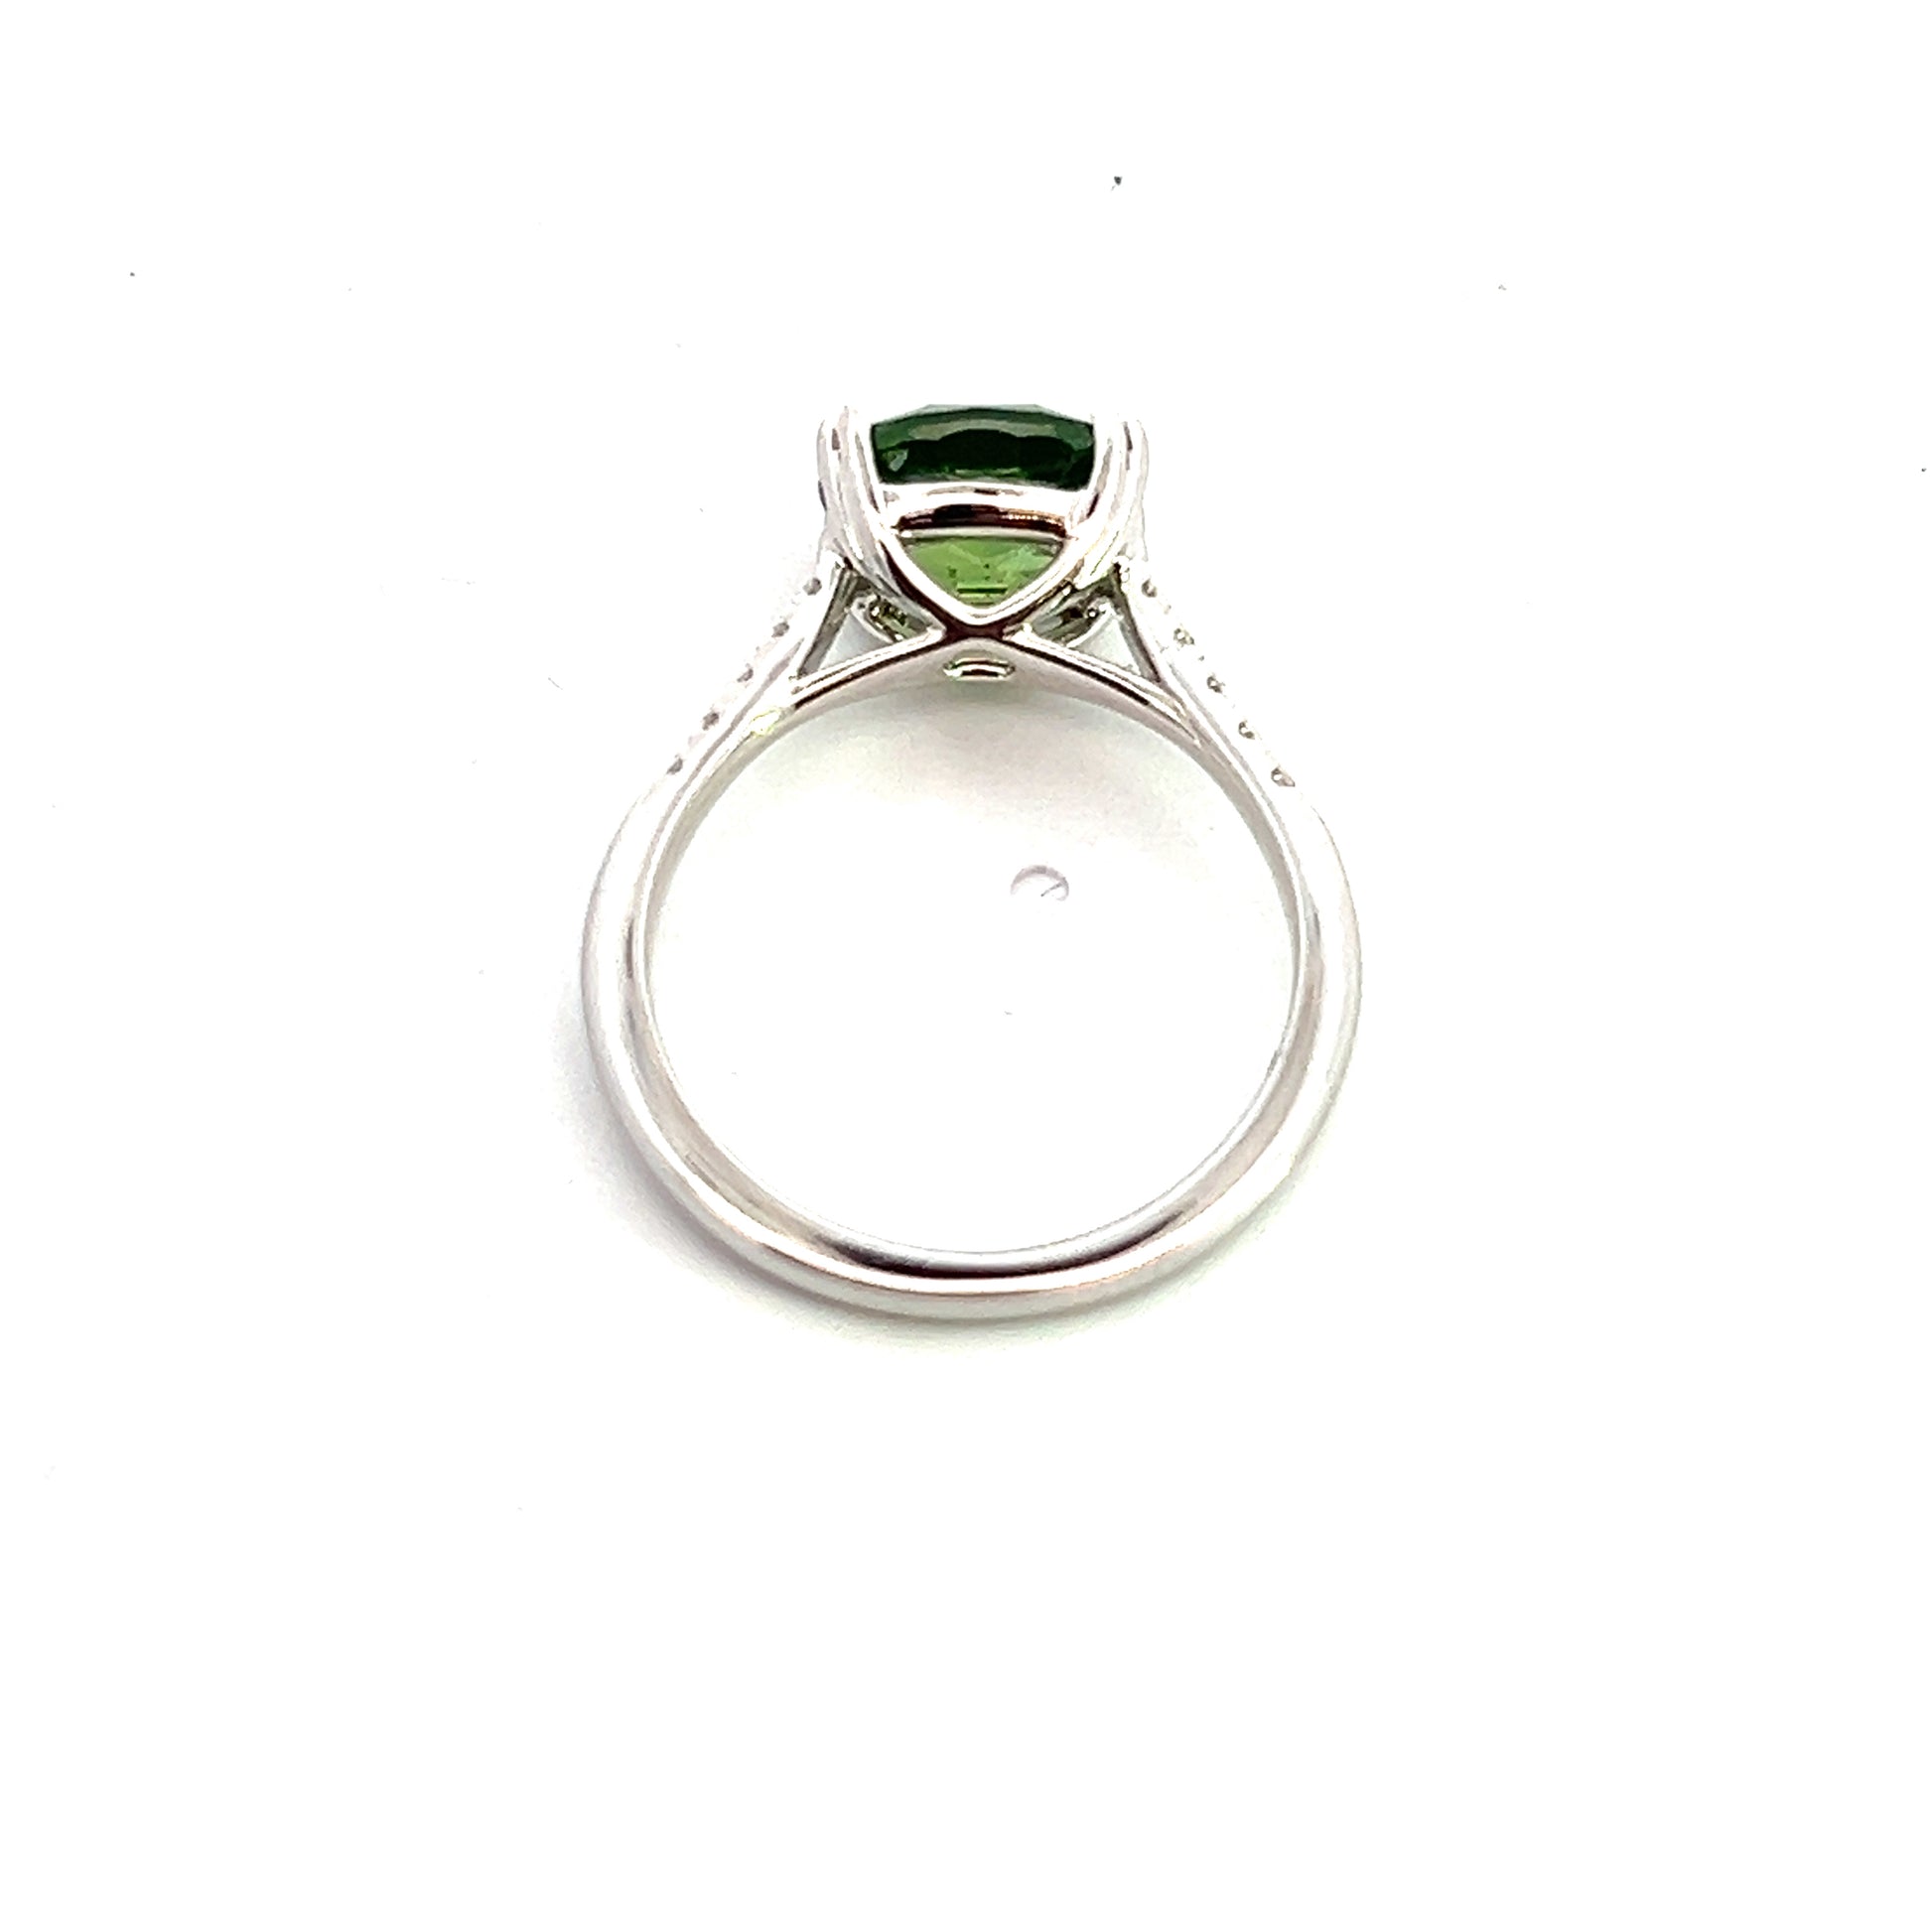 Natural Sapphire Diamond Ring 6.5 14k WG 2.89 TCW Certified $4,950 310999